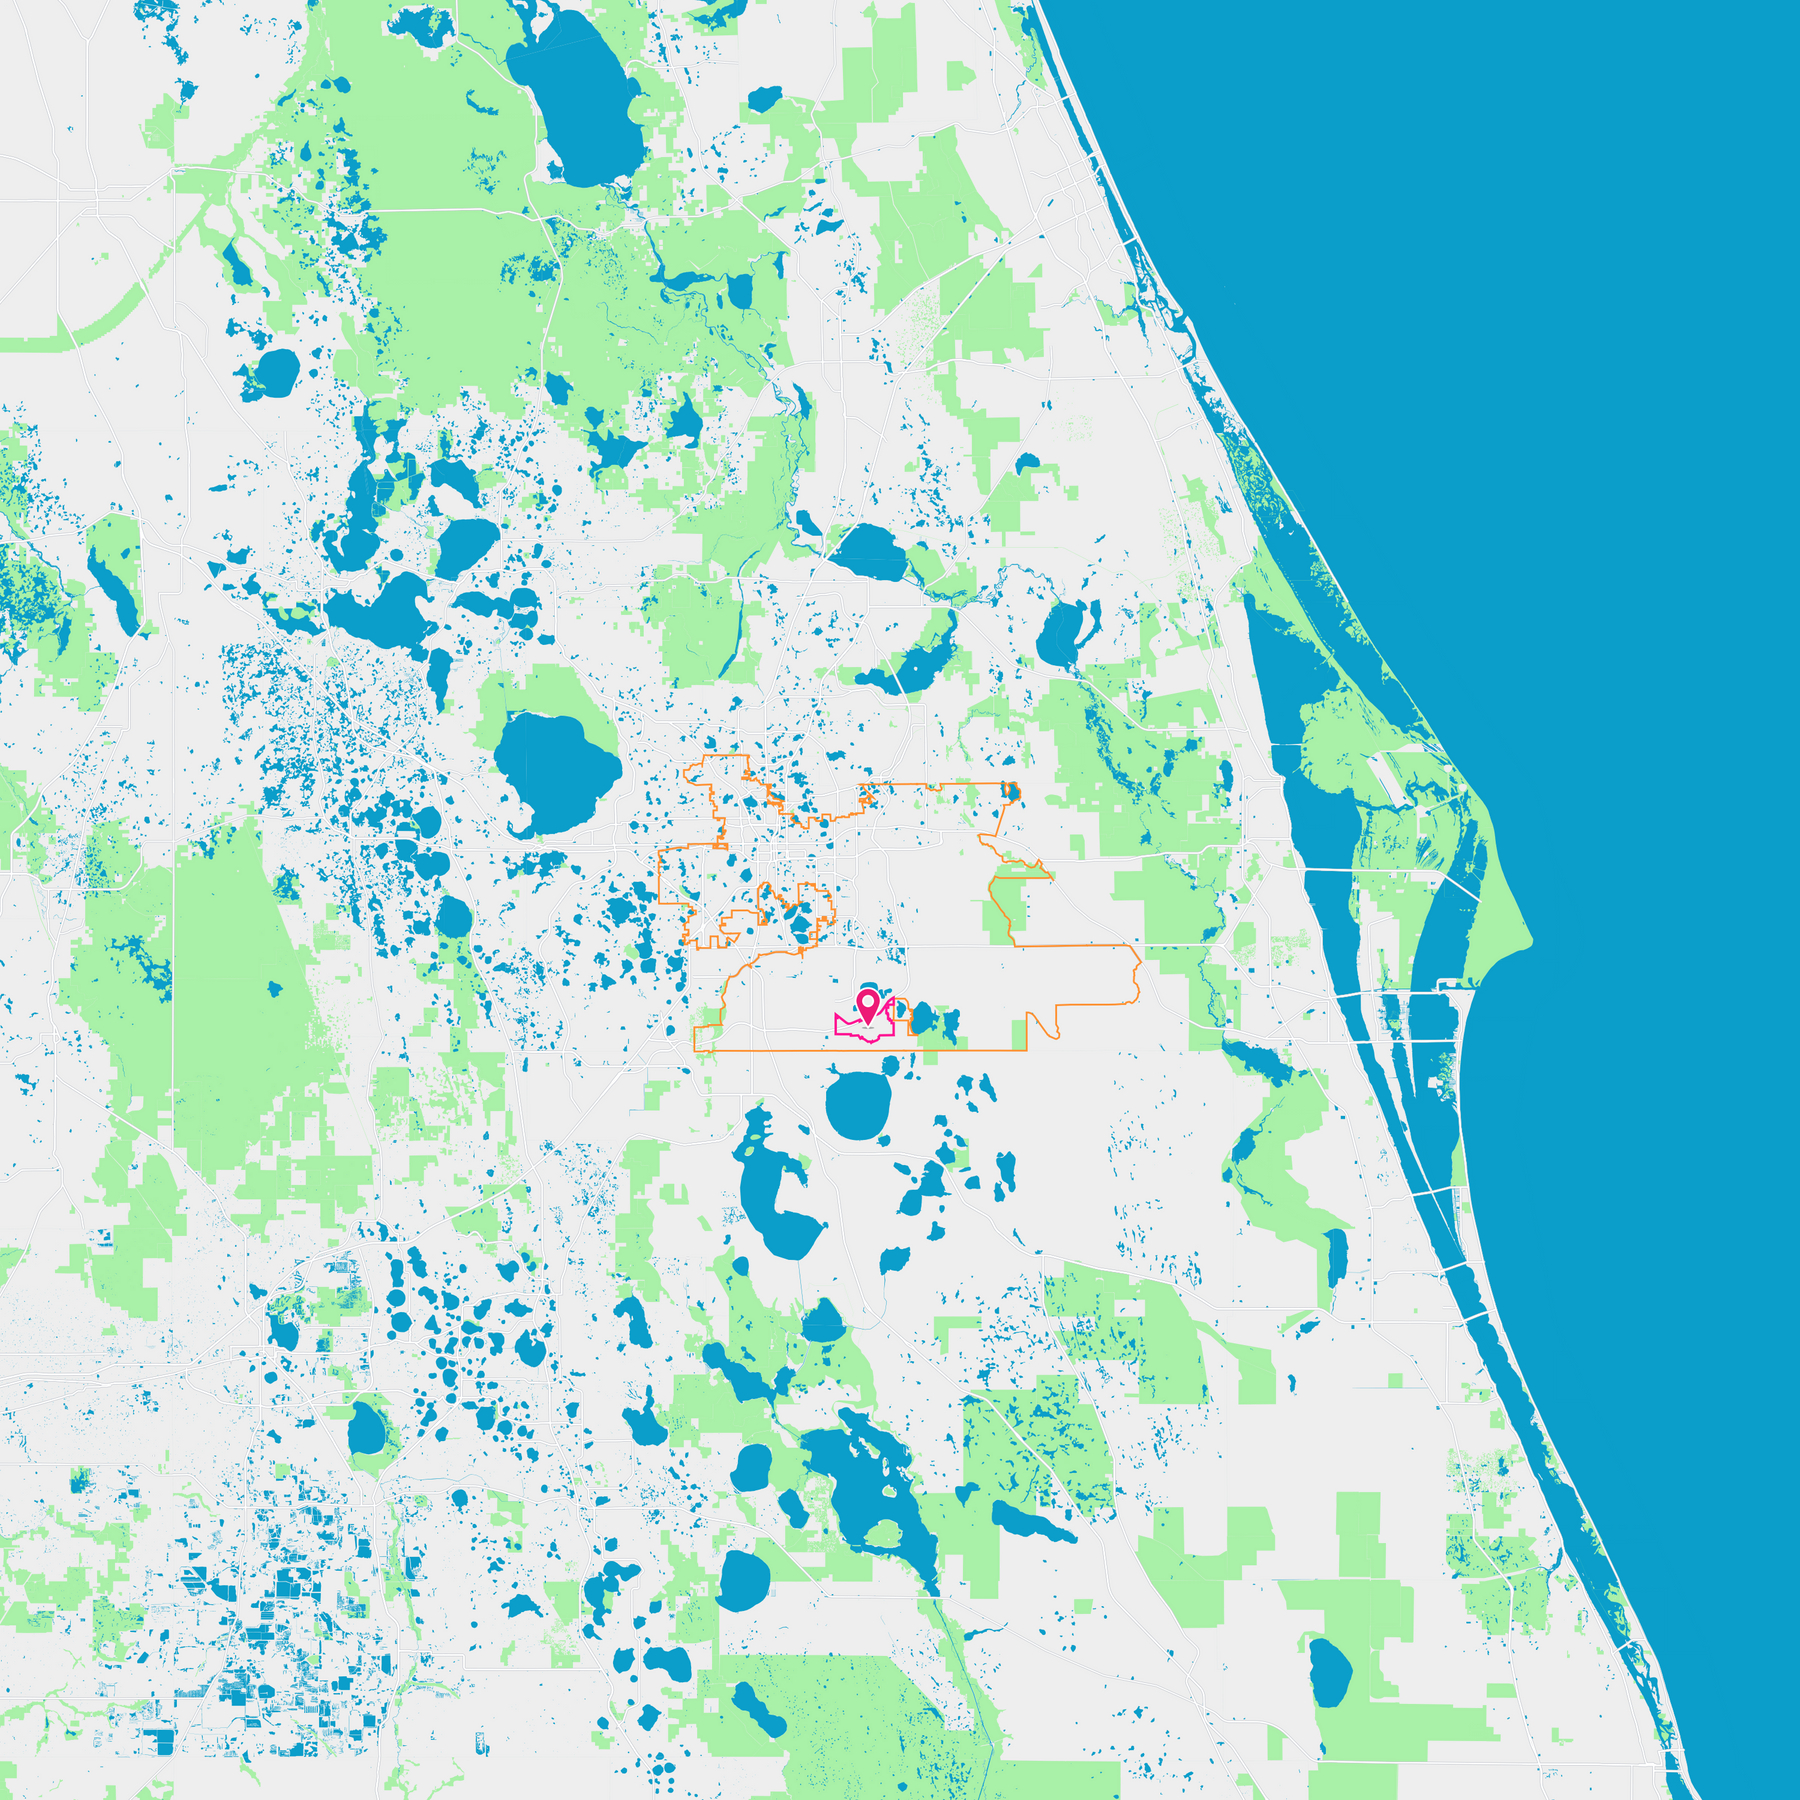 Lake Nona South Neighborhood Guide - Orlando, Fl | Trulia - Lake Nona Florida Map